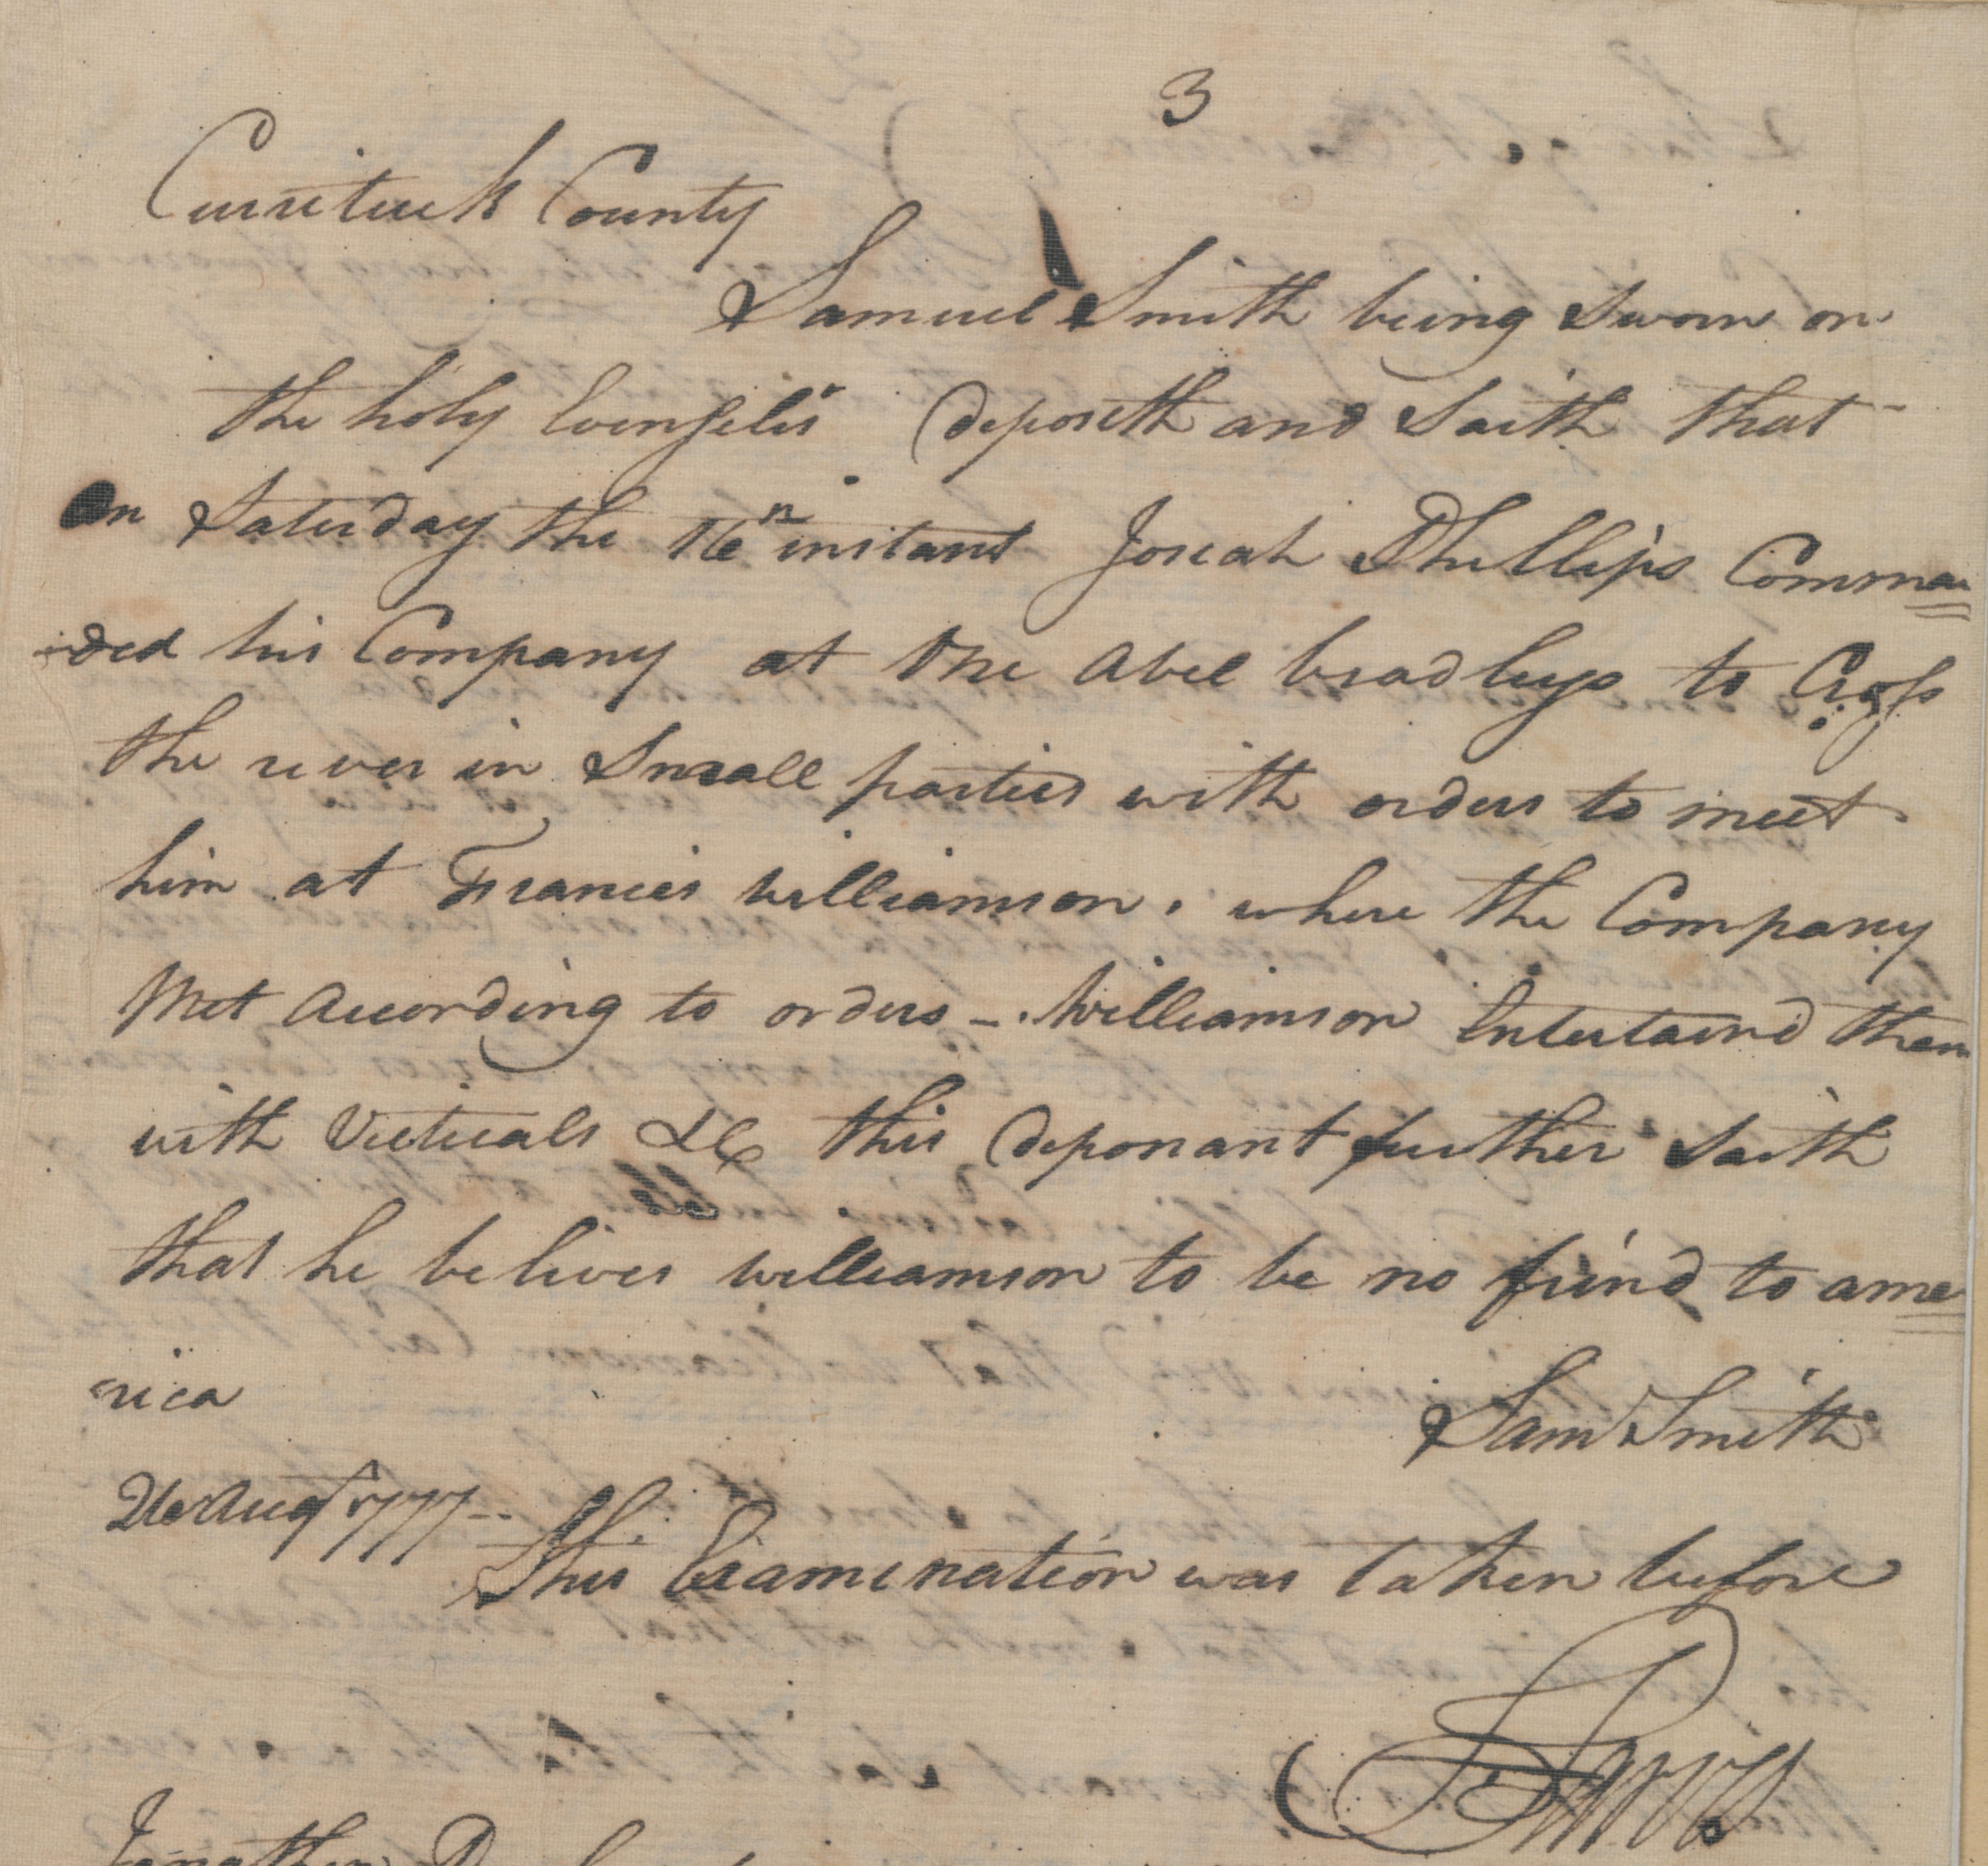 Deposition of Samuel Smith, 26 August 1777